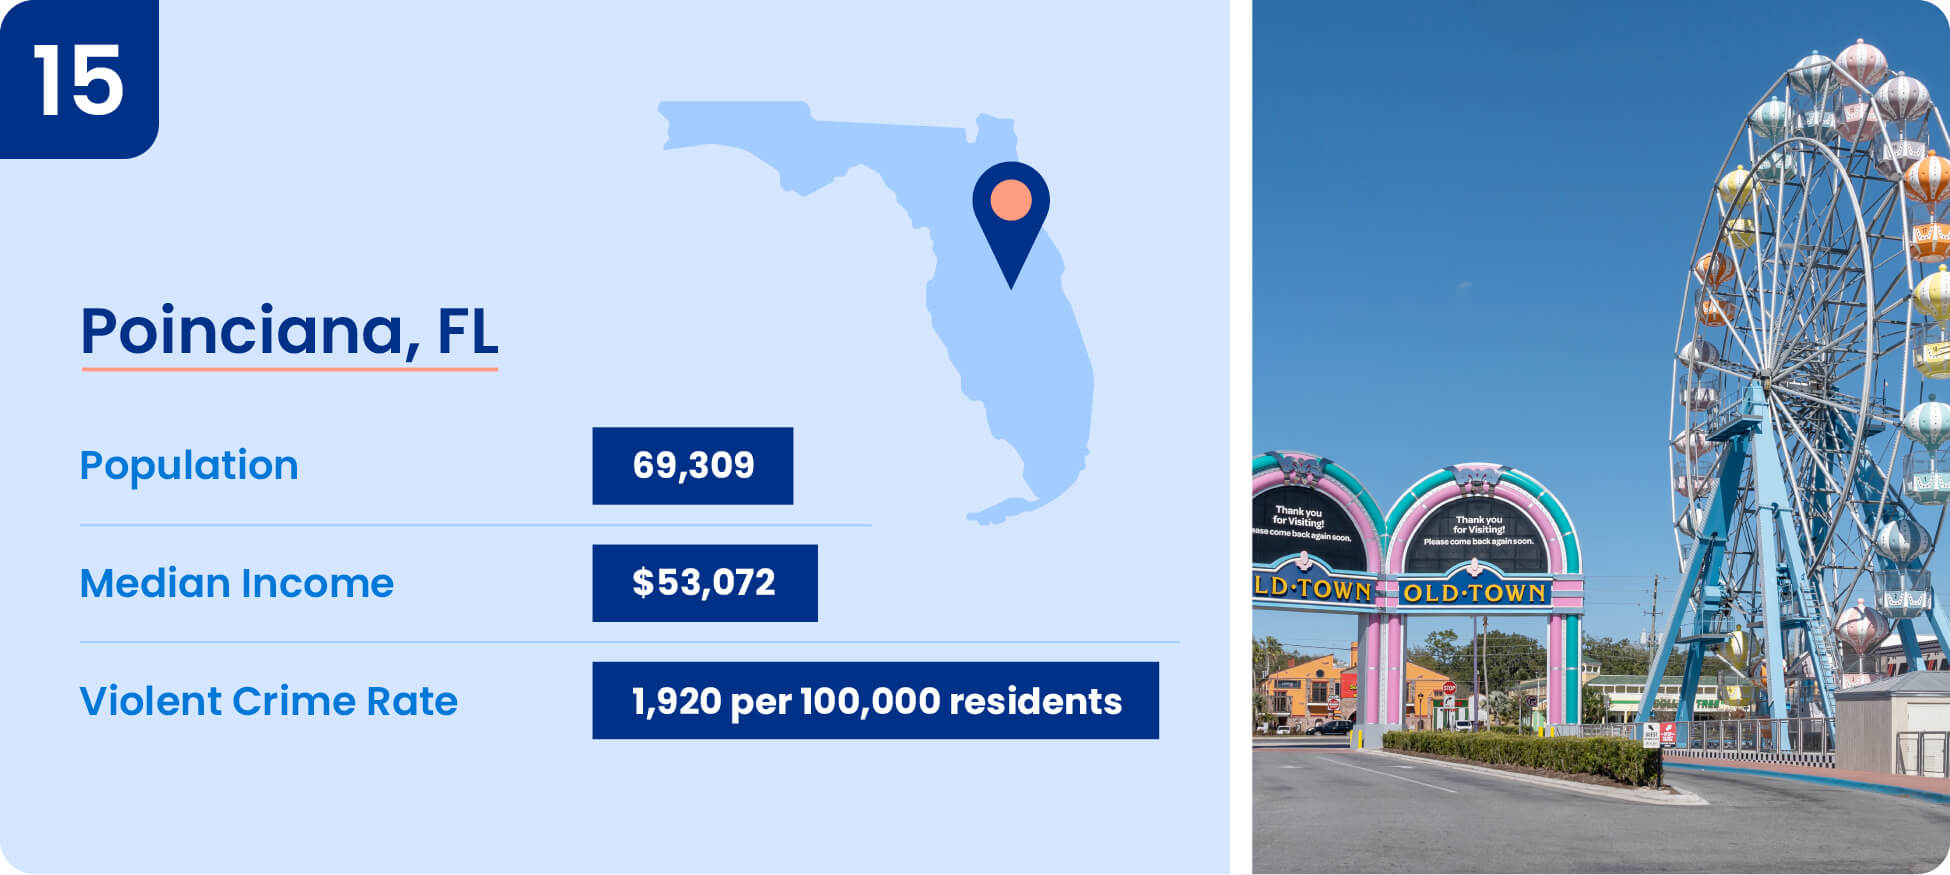 Image shows safety data including median income, population, and violent crime rate for Poinciana, Florida.